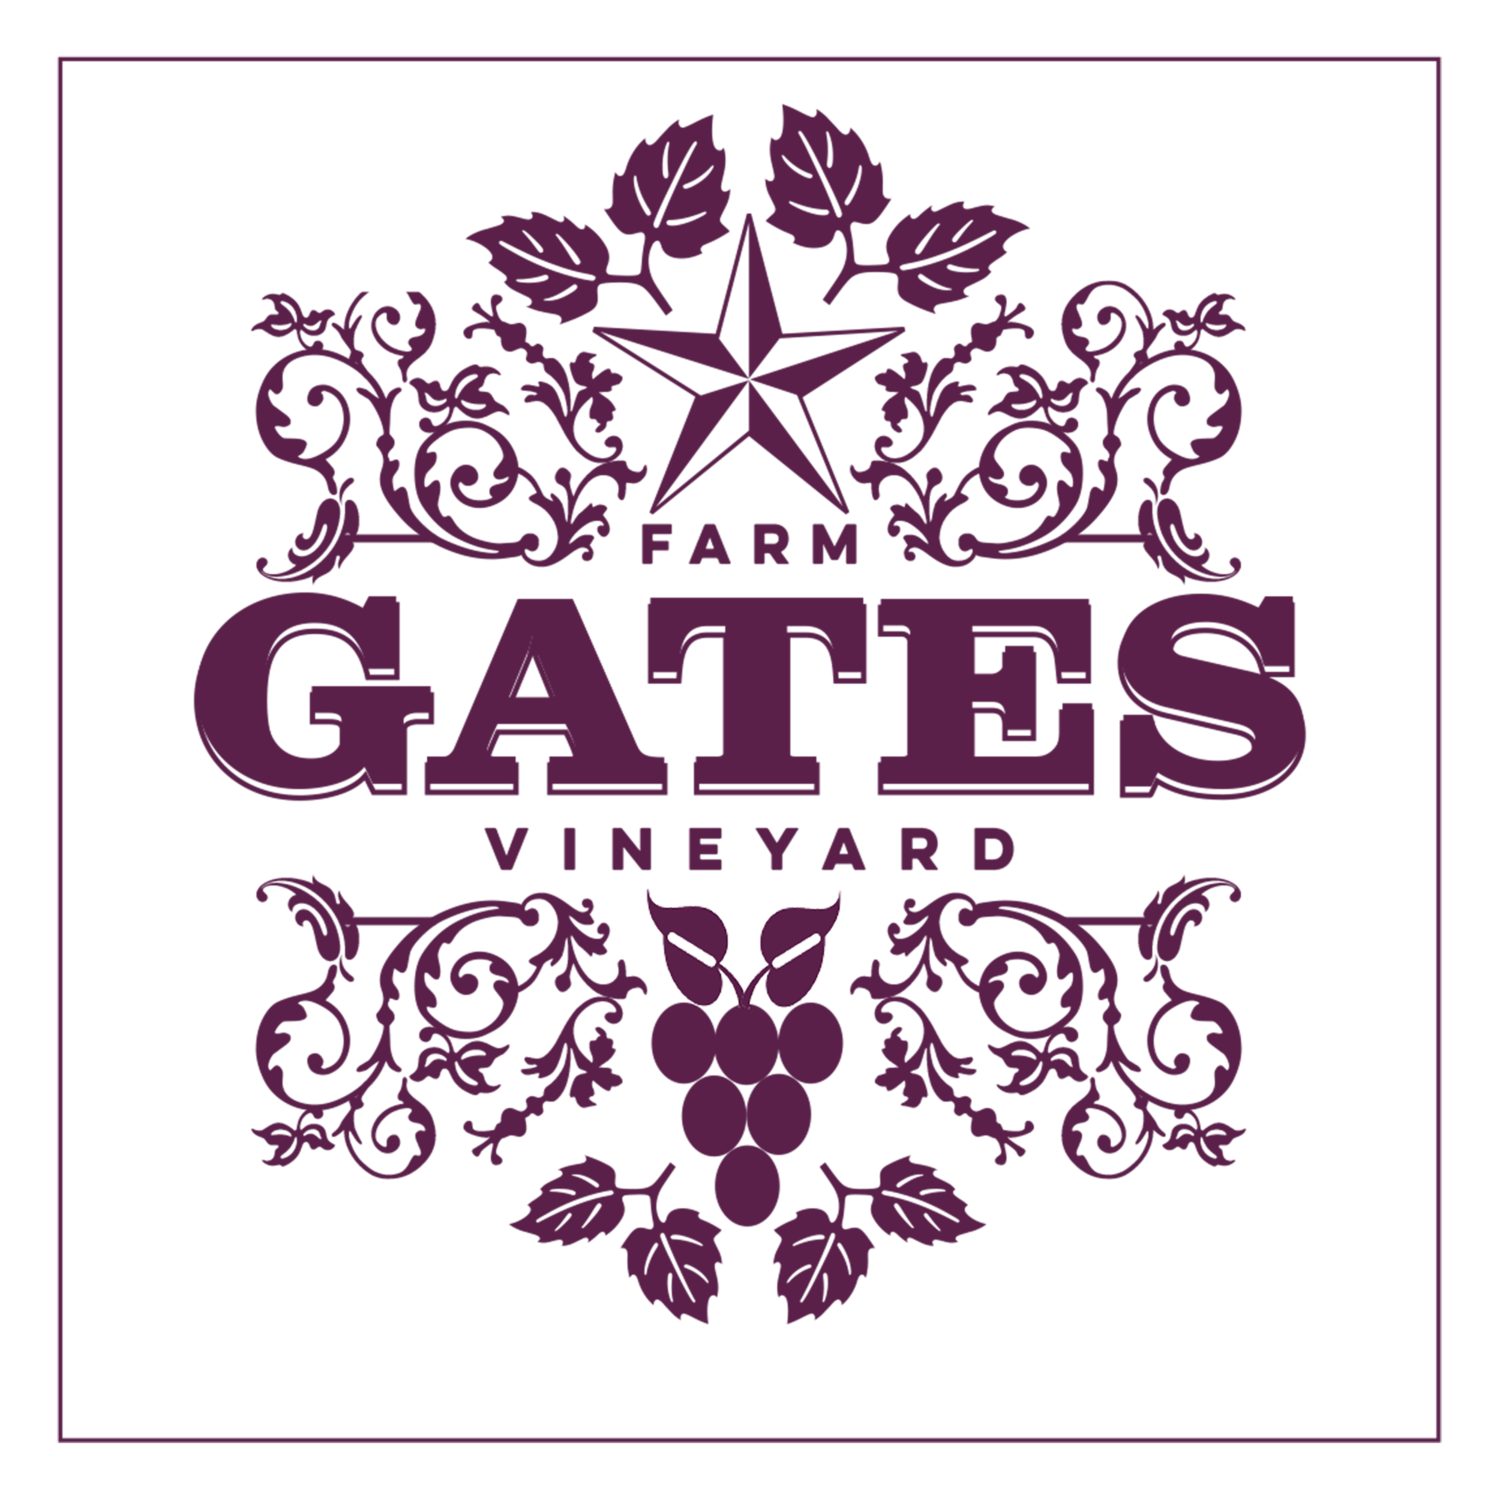 Gates farm and vineyard